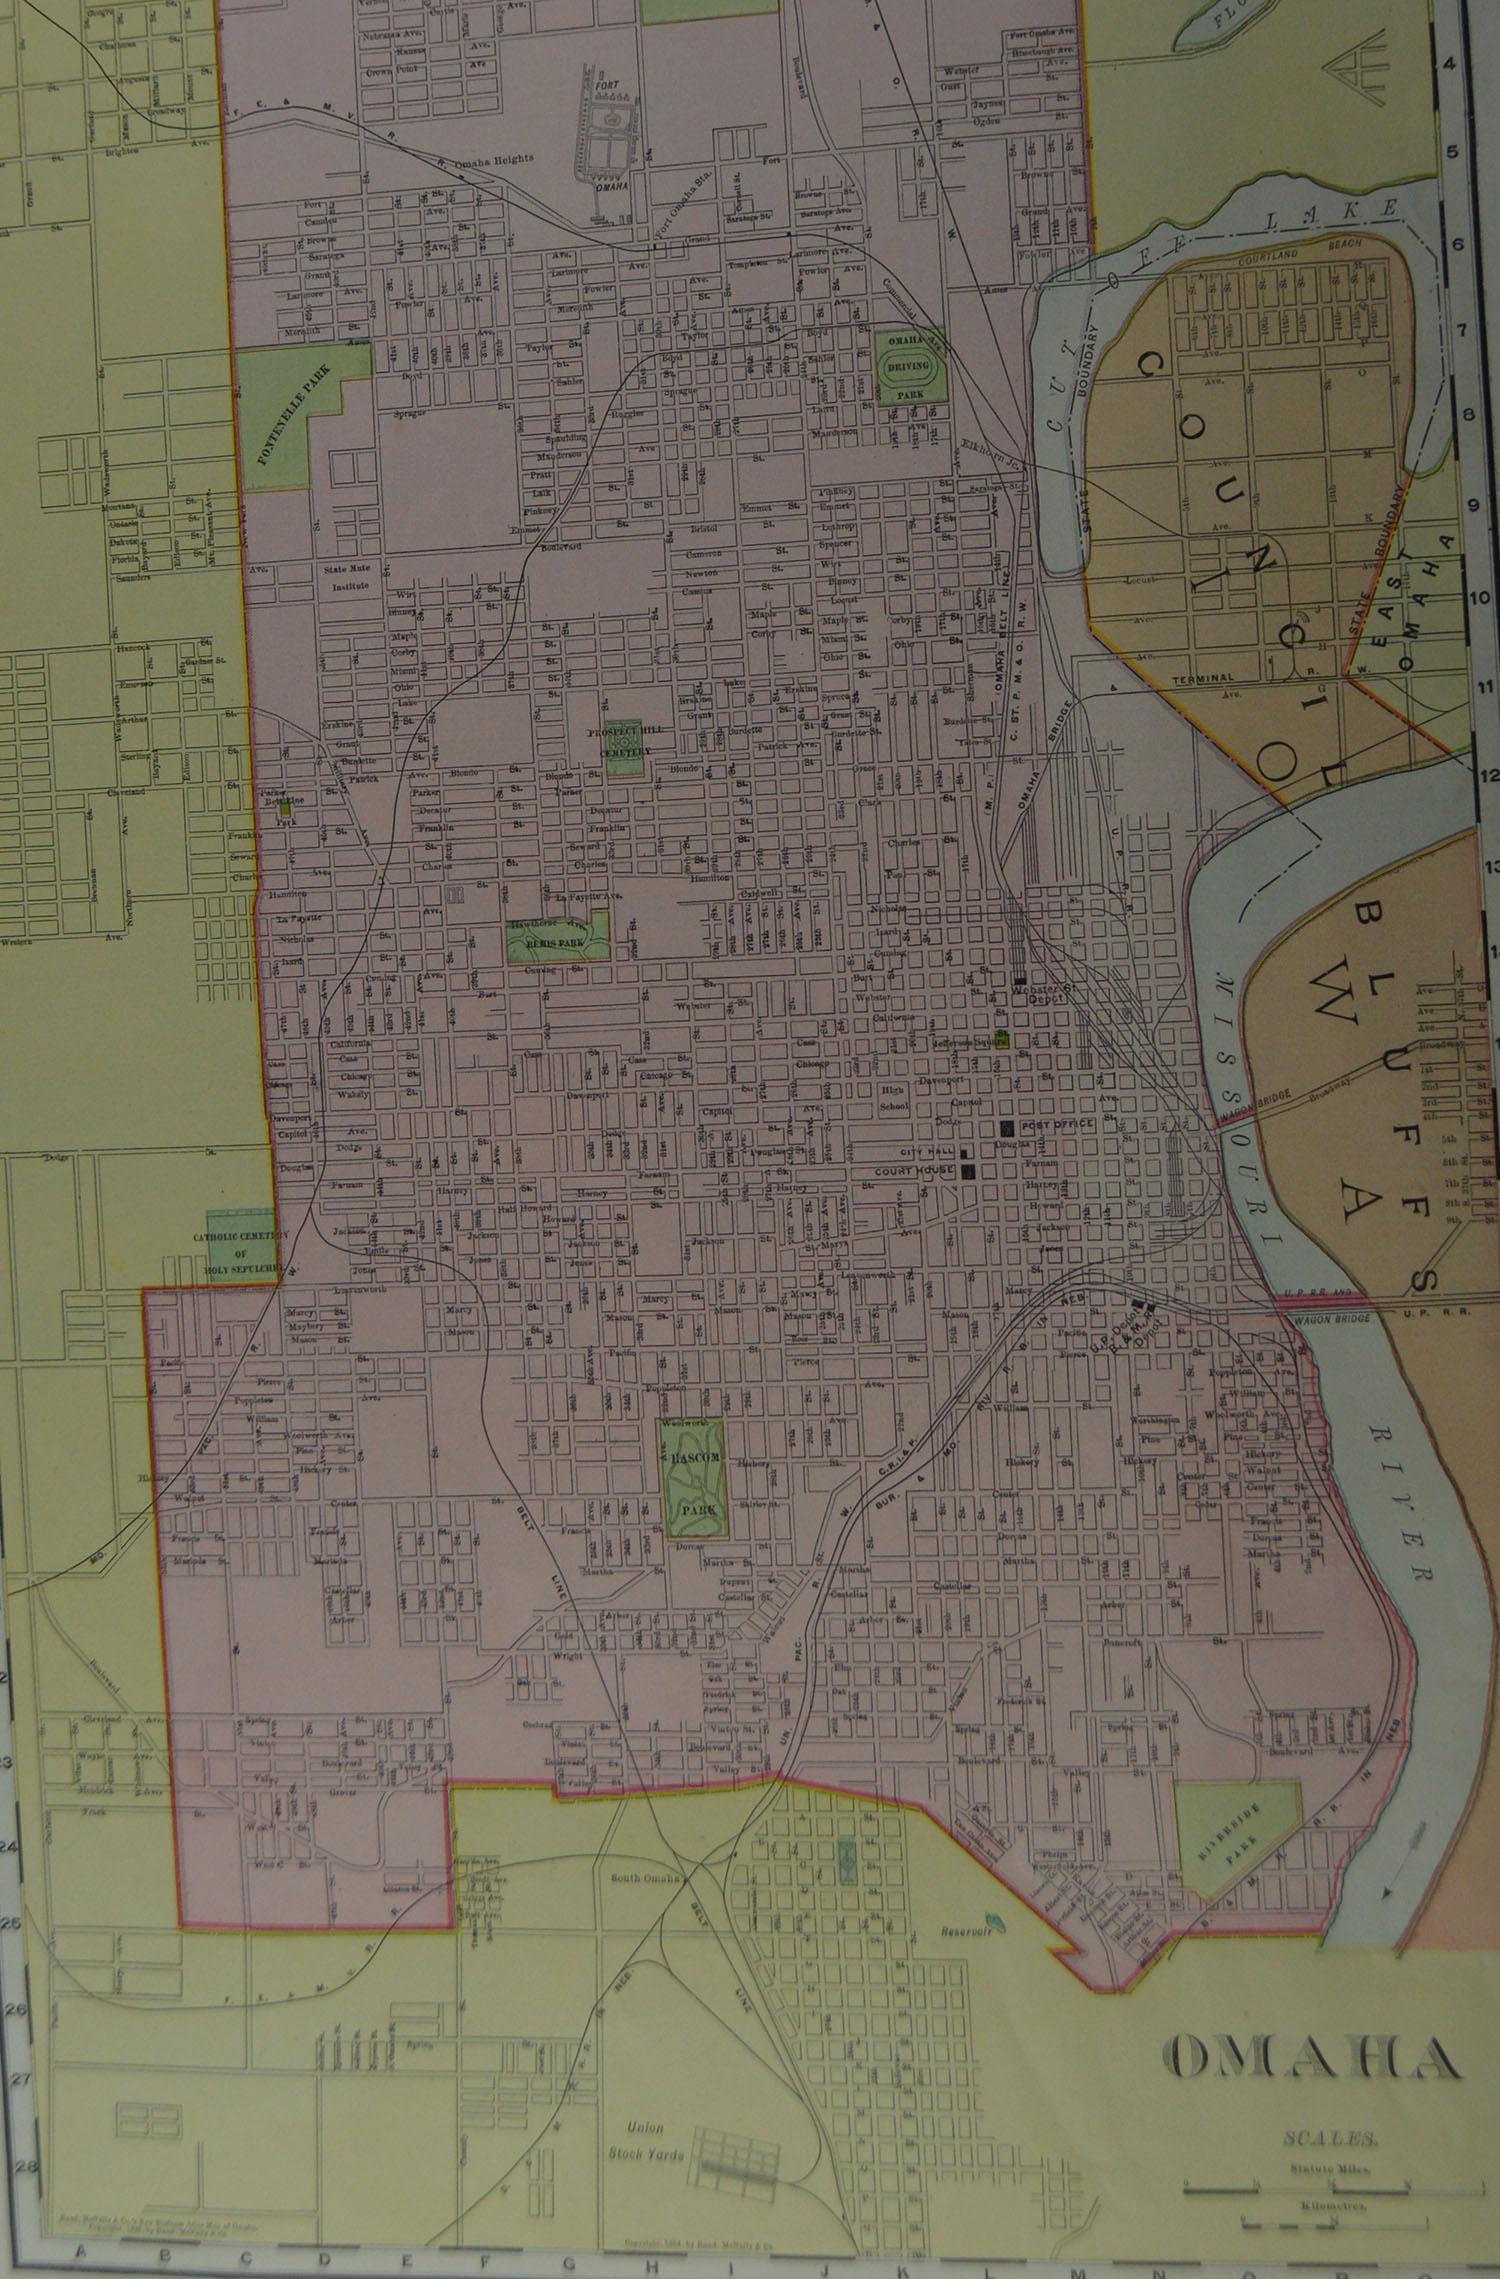 American Original Antique City Plan of Omaha, Nebraska, USA, circa 1900